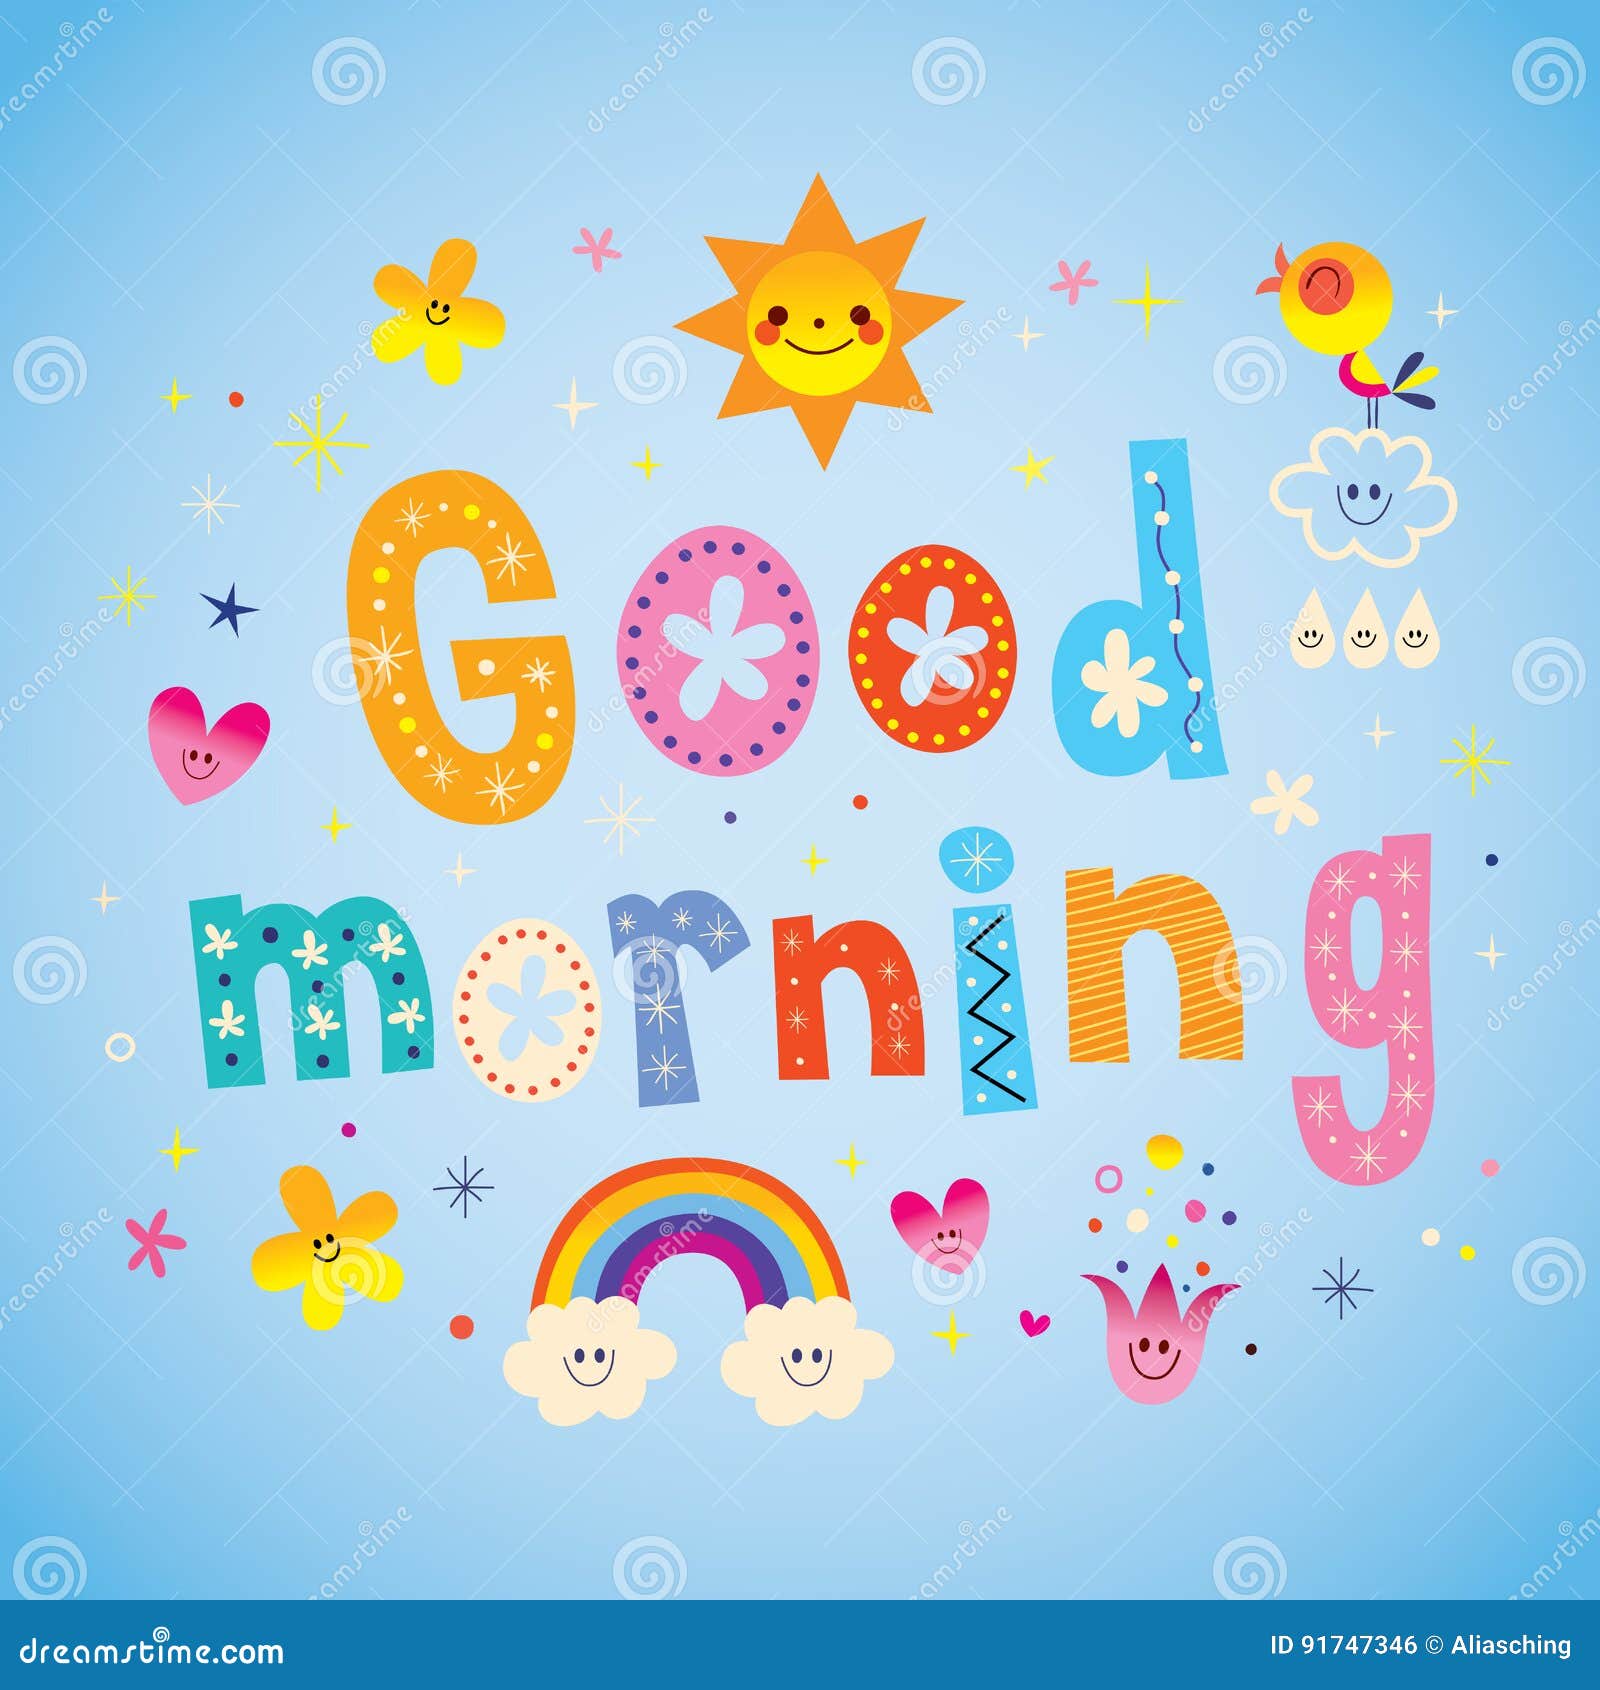 Good morning stock vector. Illustration of morning, phrase - 91747346